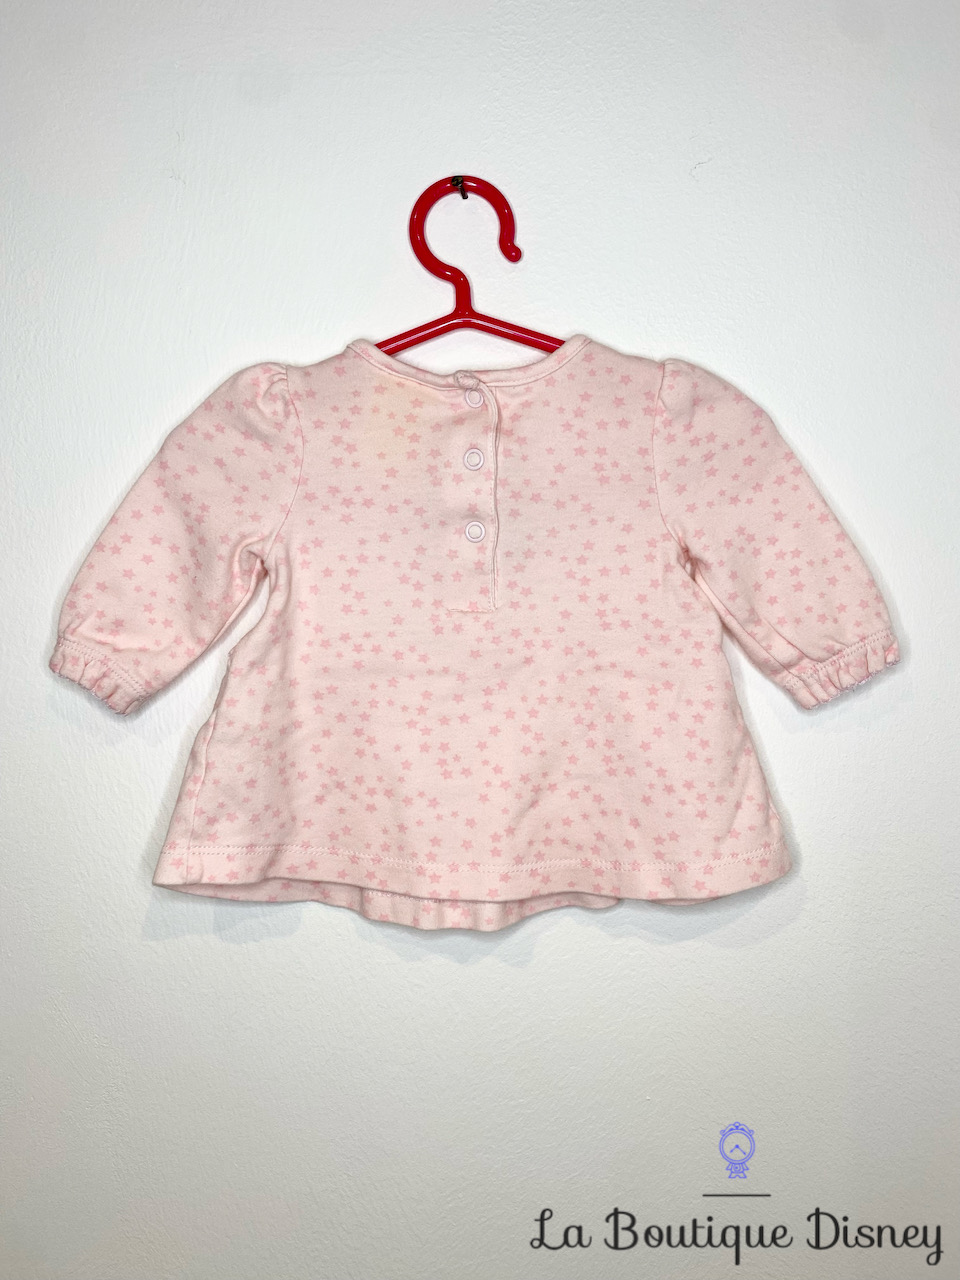 robe-dumbo-disney-baby-by-disney-store-3-mois-rose-étoiles-9